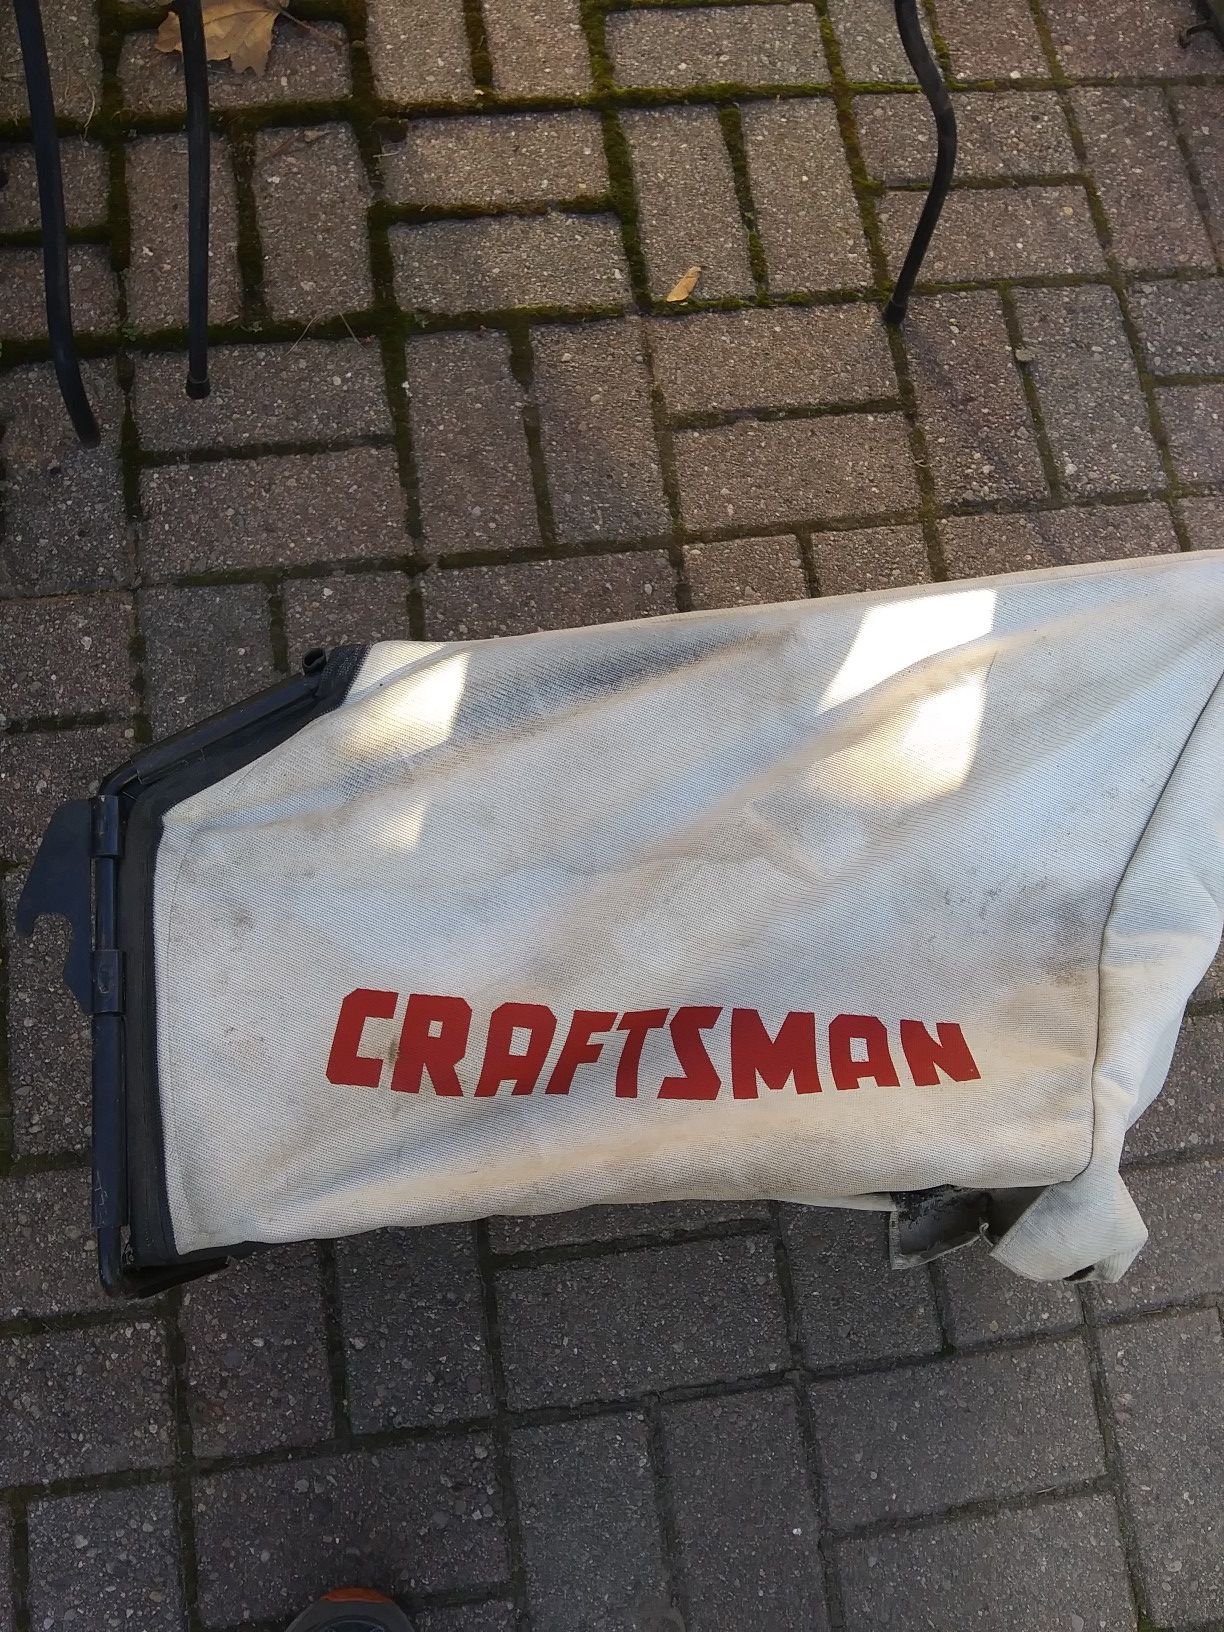 Craftsman lawn mower grass leaf catcher bag REDUCED